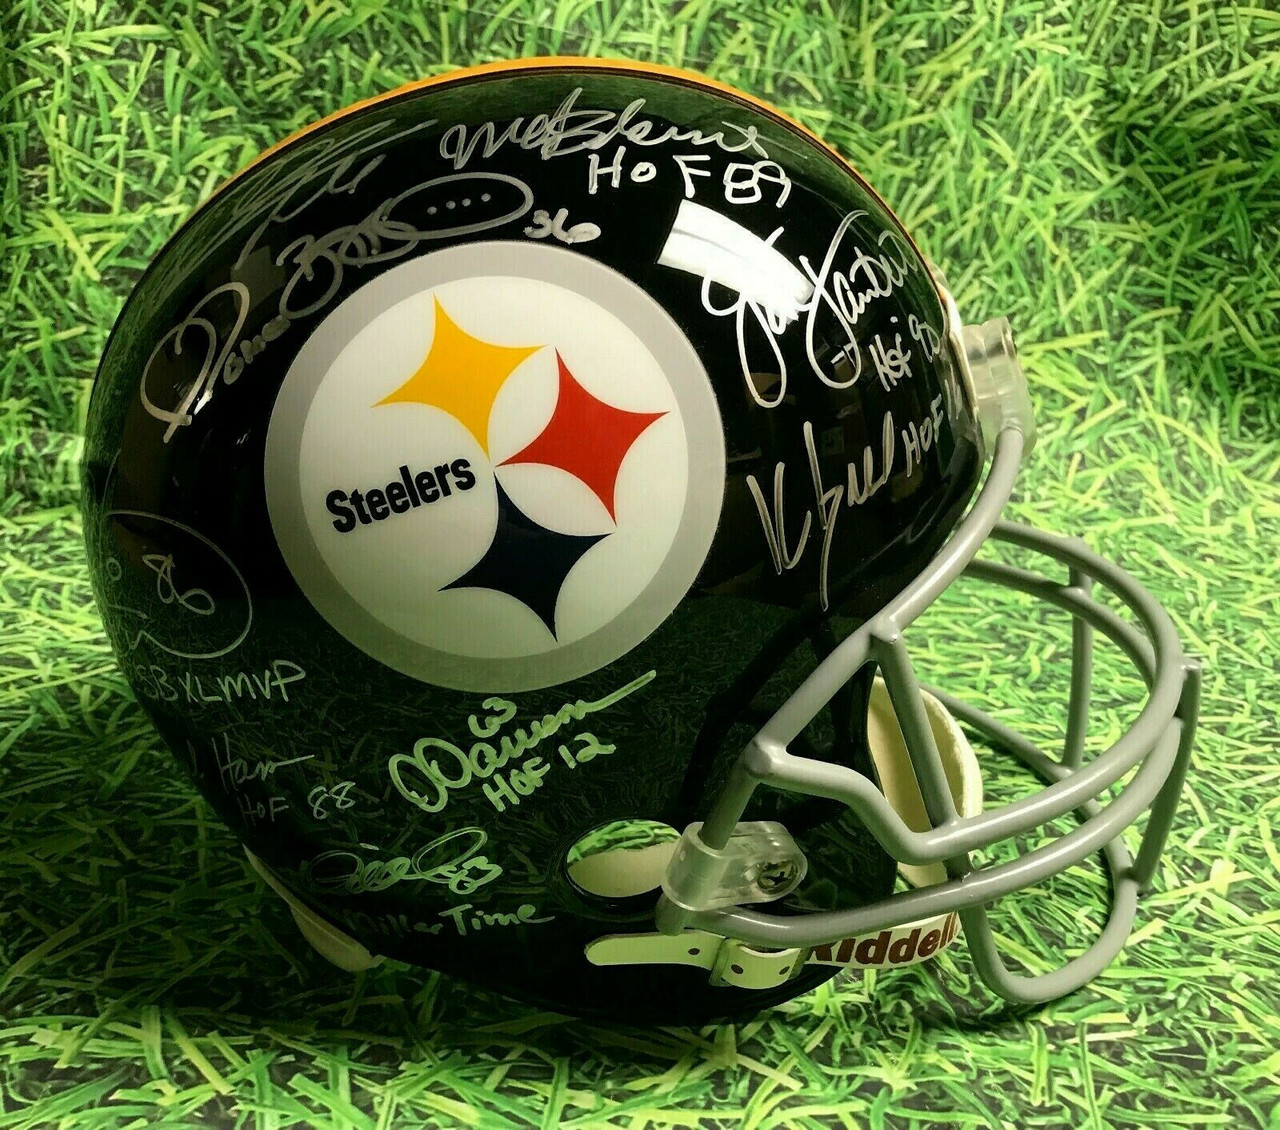 Jack Ham Autographed Pittsburgh Steelers Custom Jersey Inscribed HOF 88